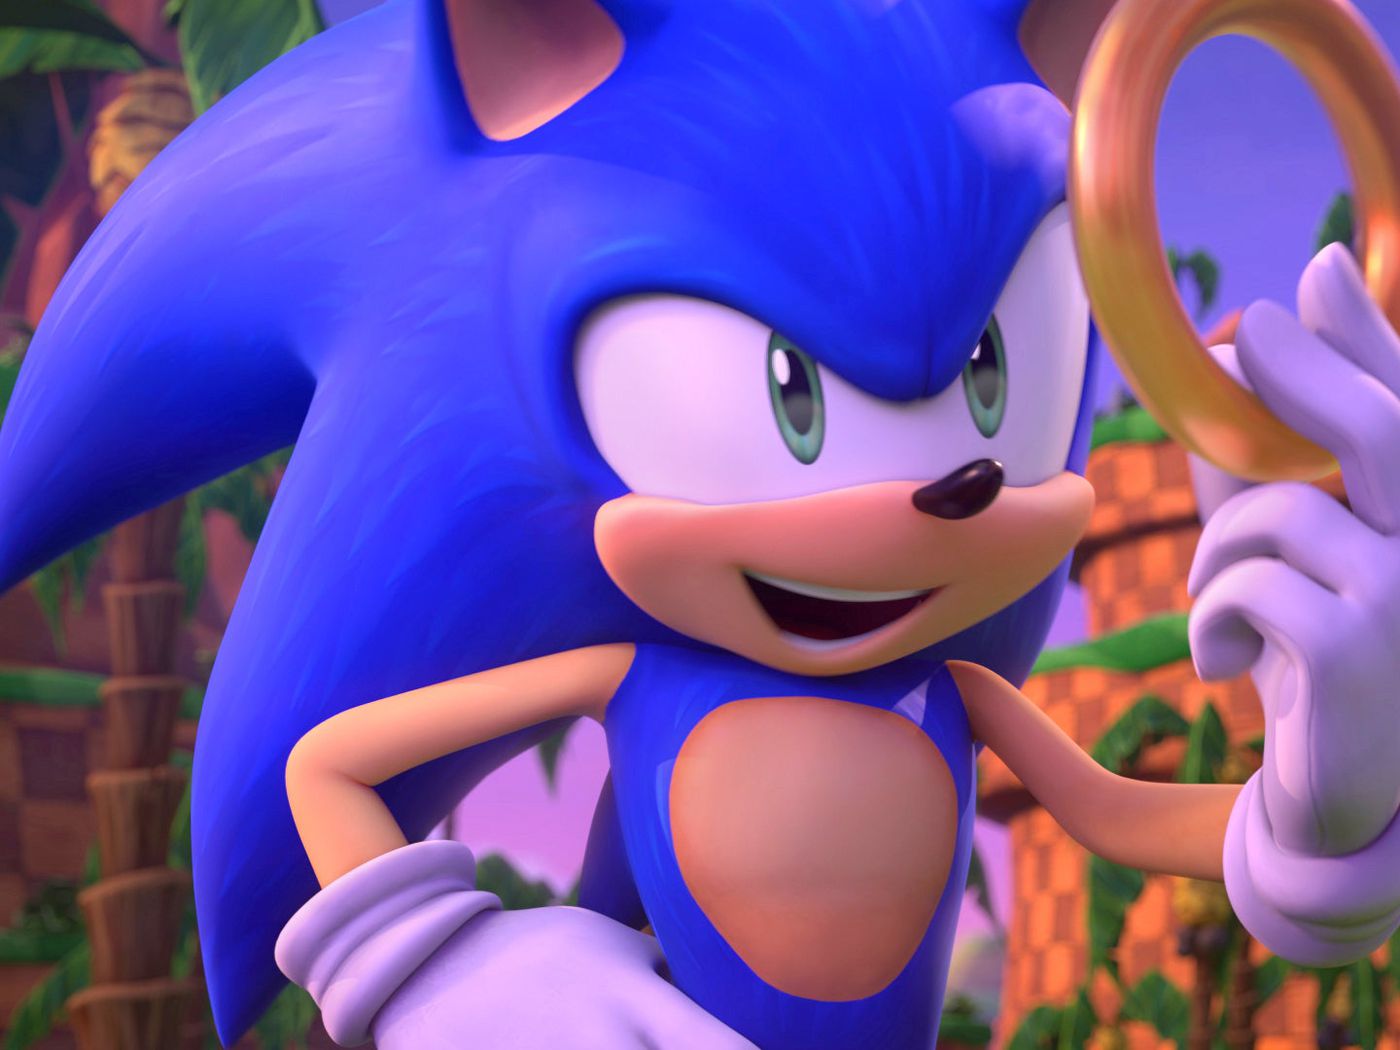 Sonic the Hedgehog's new Netflix series Sonic Prime premieres Dec. 15